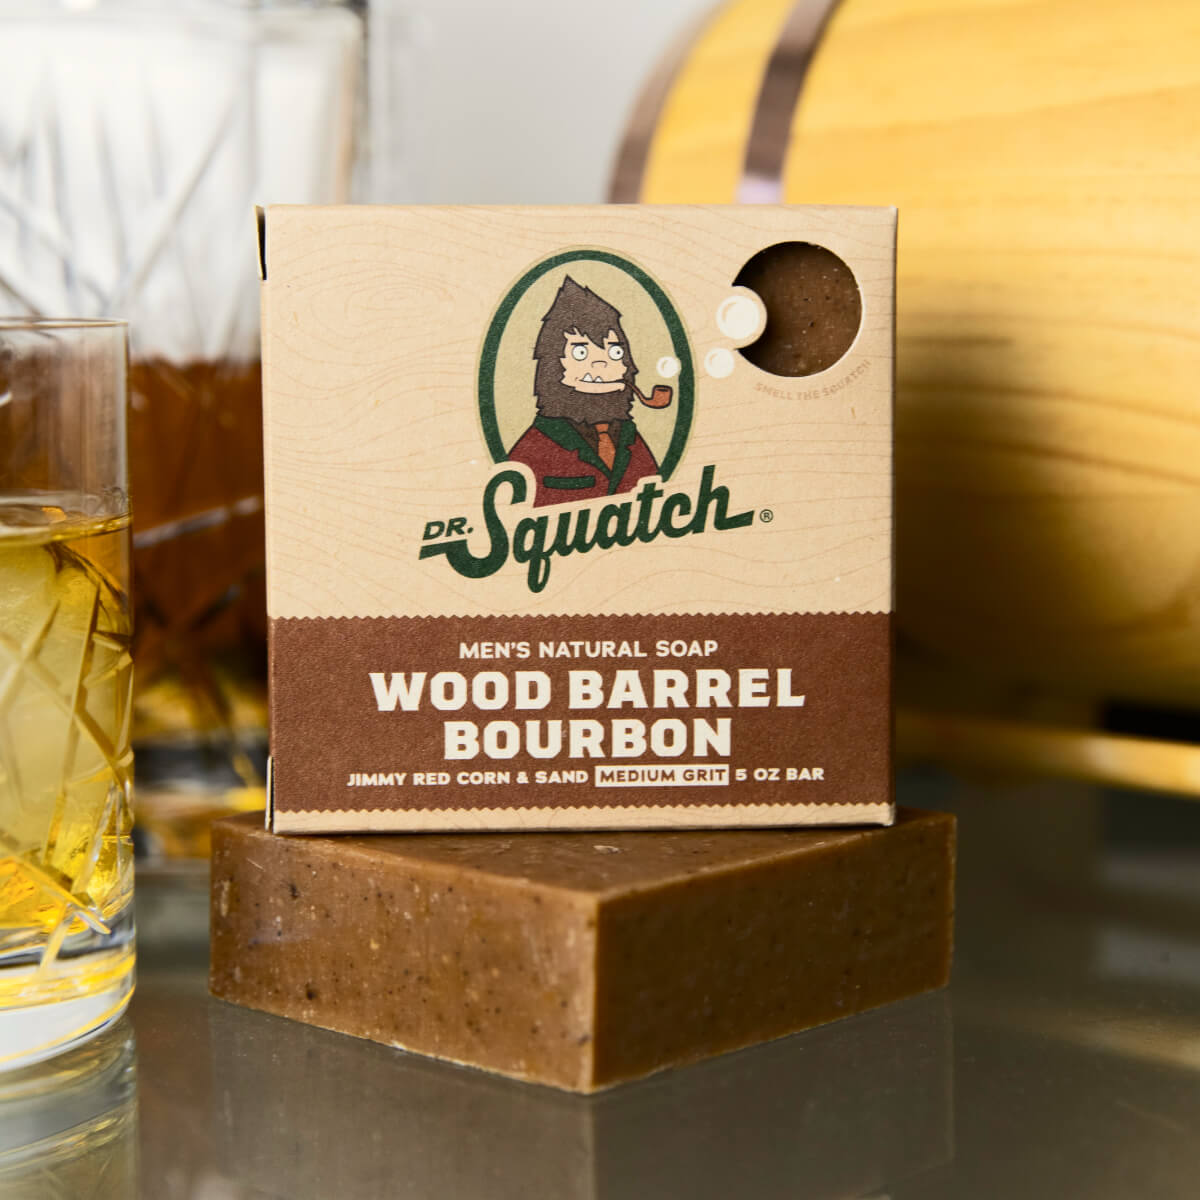 Dr. Squatch Men's Cologne and Natural Bar Soap - Fireside Bourbon Natural  Cologne and Wood Barrel Bourbon and Bay Rum Men's Bar Soap - Smell like